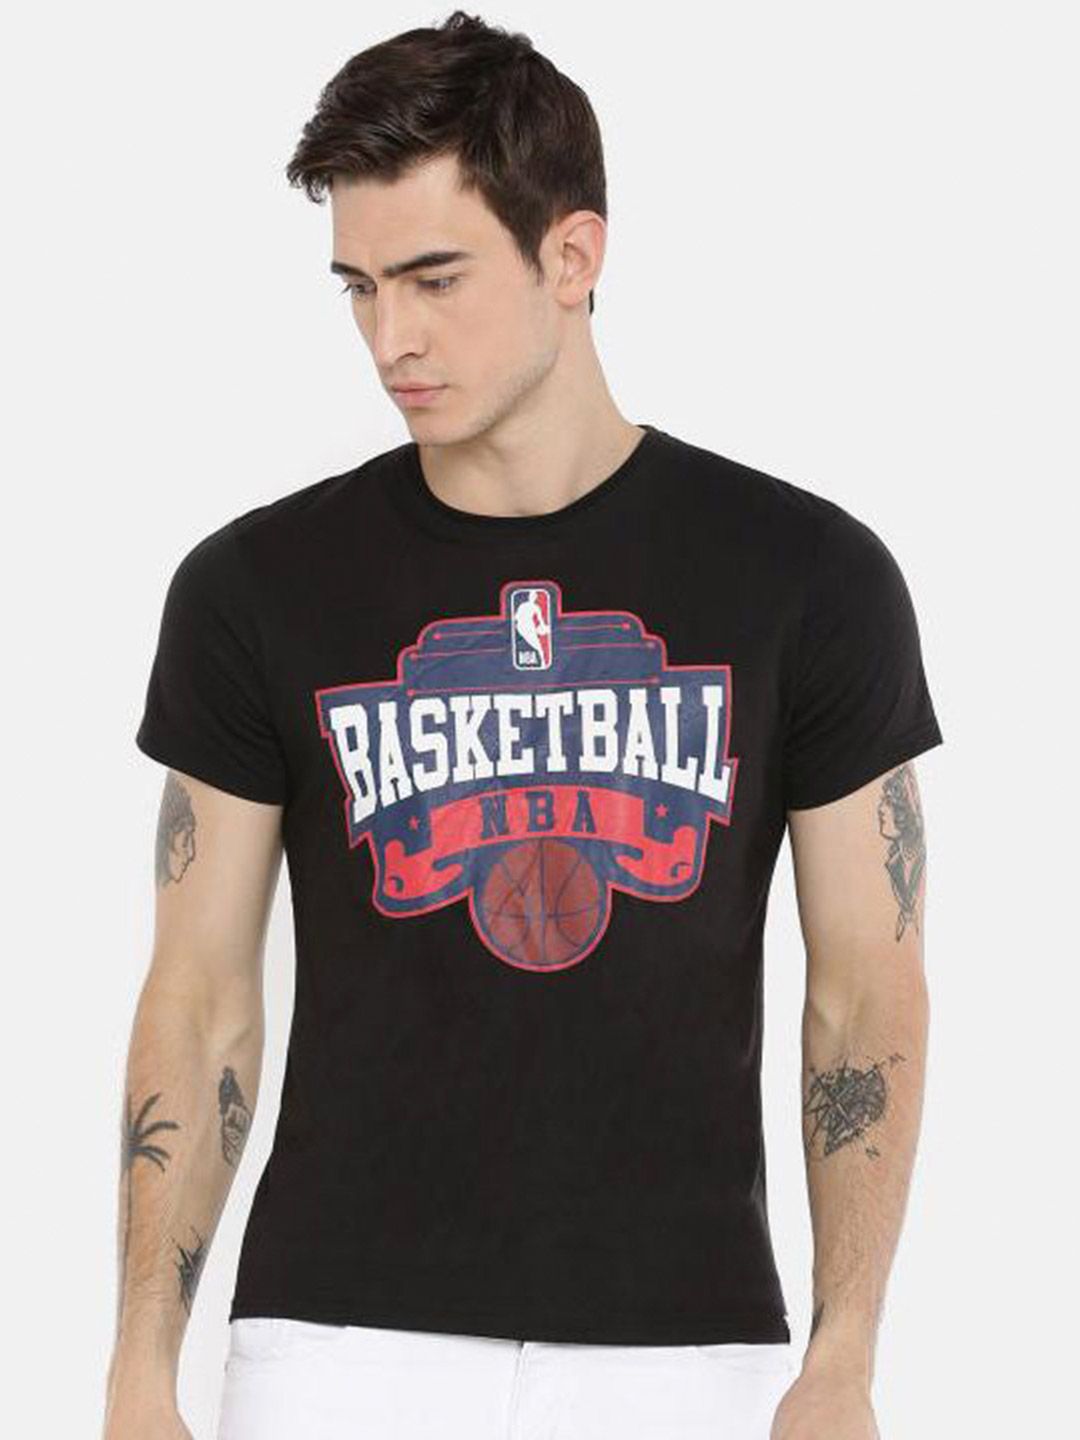 Buy LA Lakers NBA Basketball Graphic Black T-Shirt From Fancode Shop.